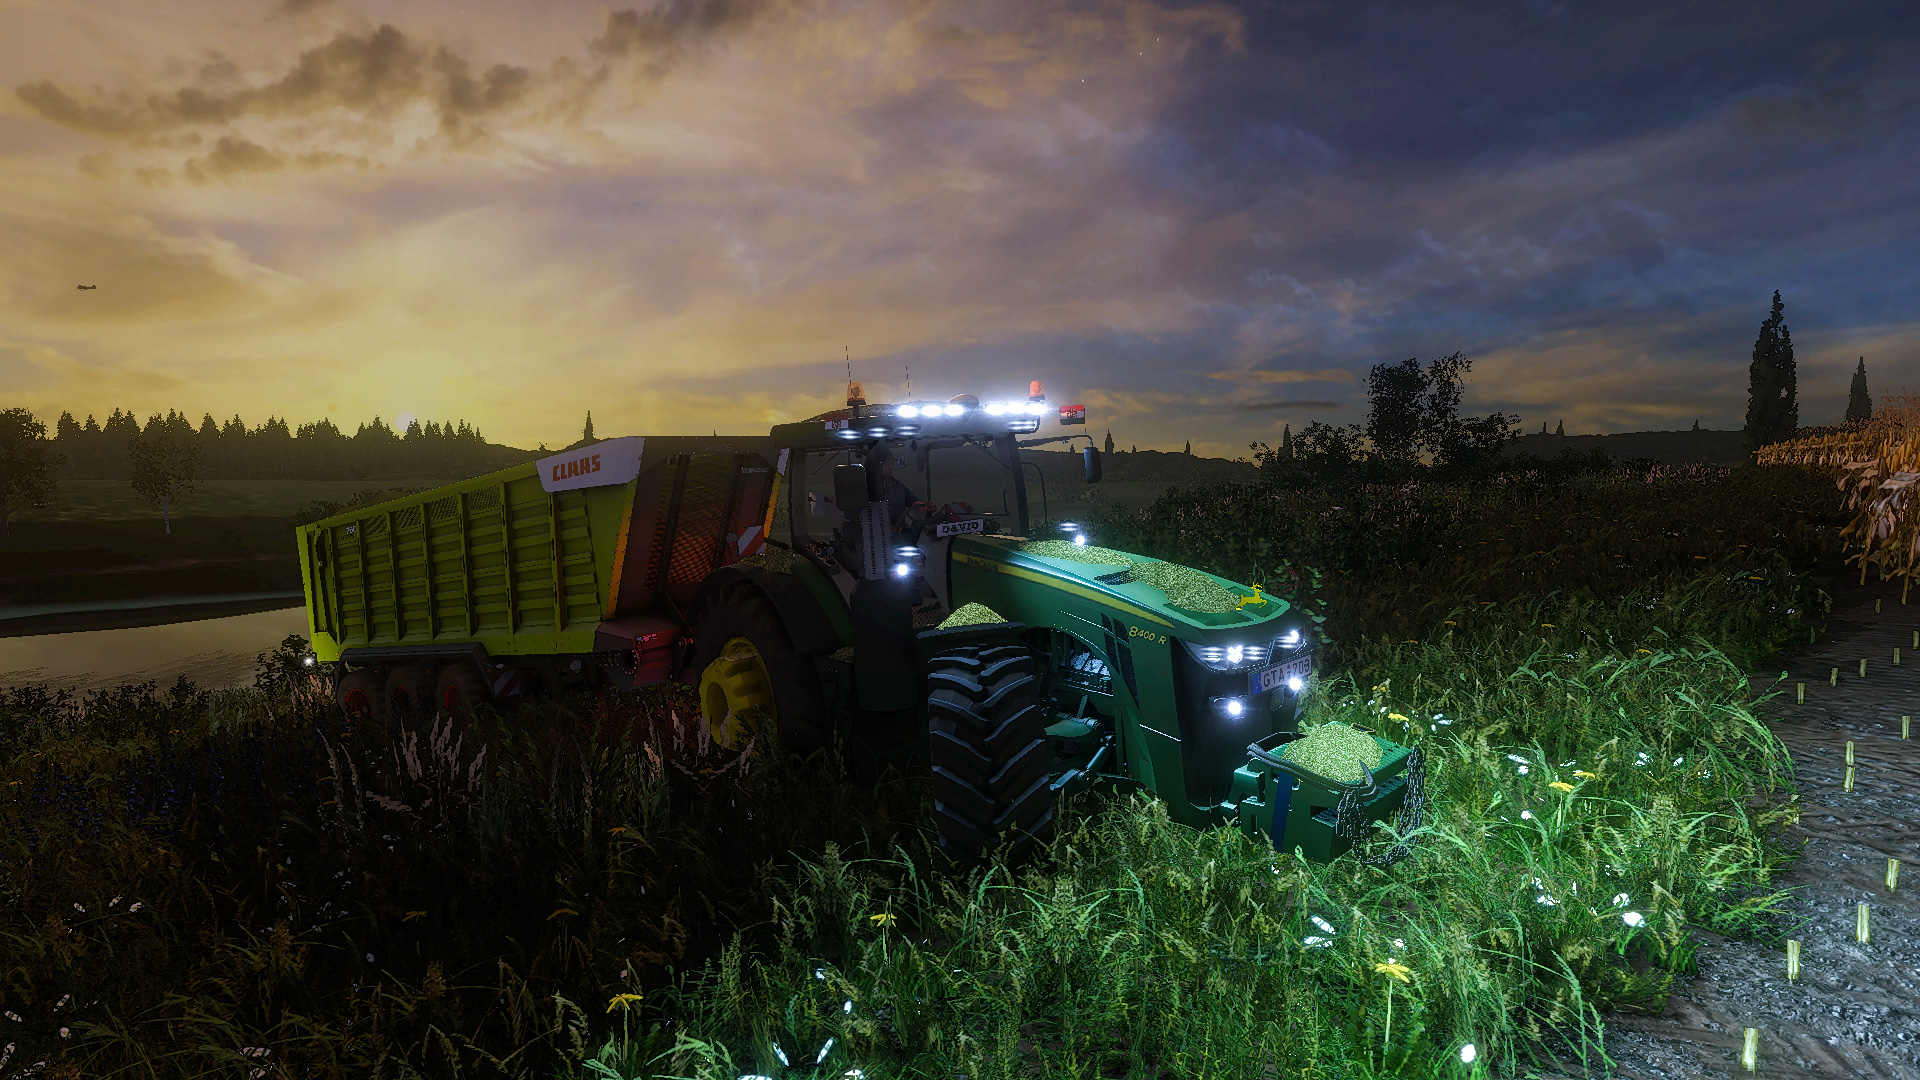 farming simulator 17 seasons on steam